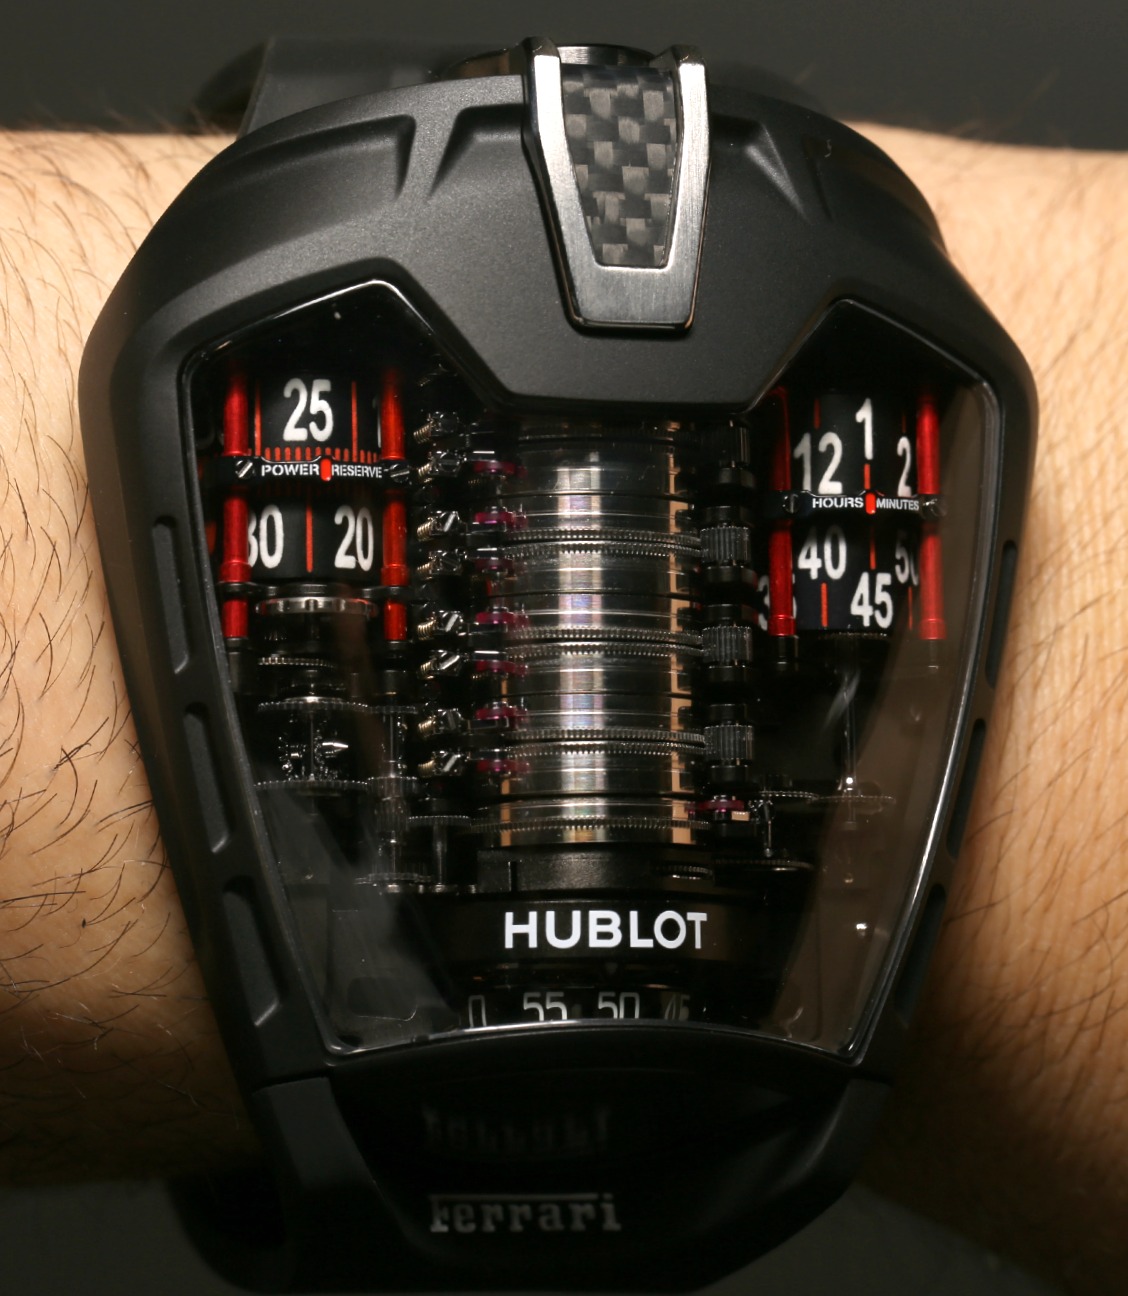 Hublot MP-05 LaFerrari watch